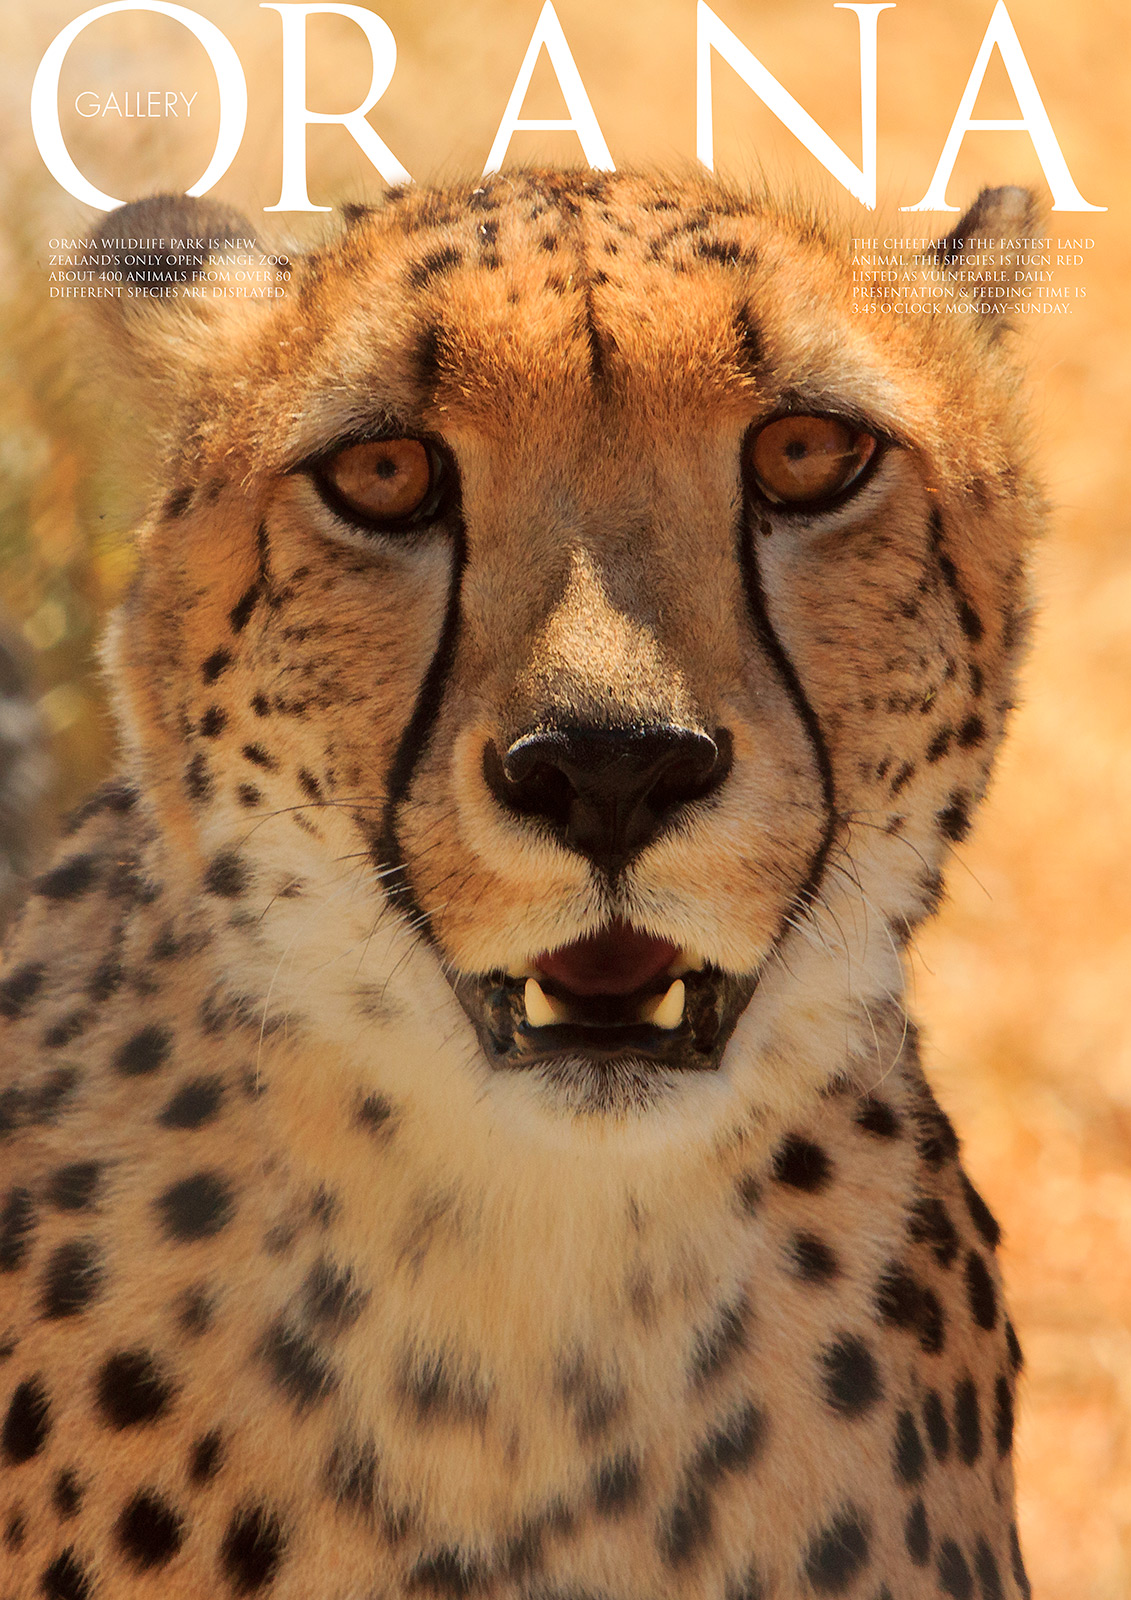 Wildlife Photo portrait of a Cheetah at Orana Wildlife Park